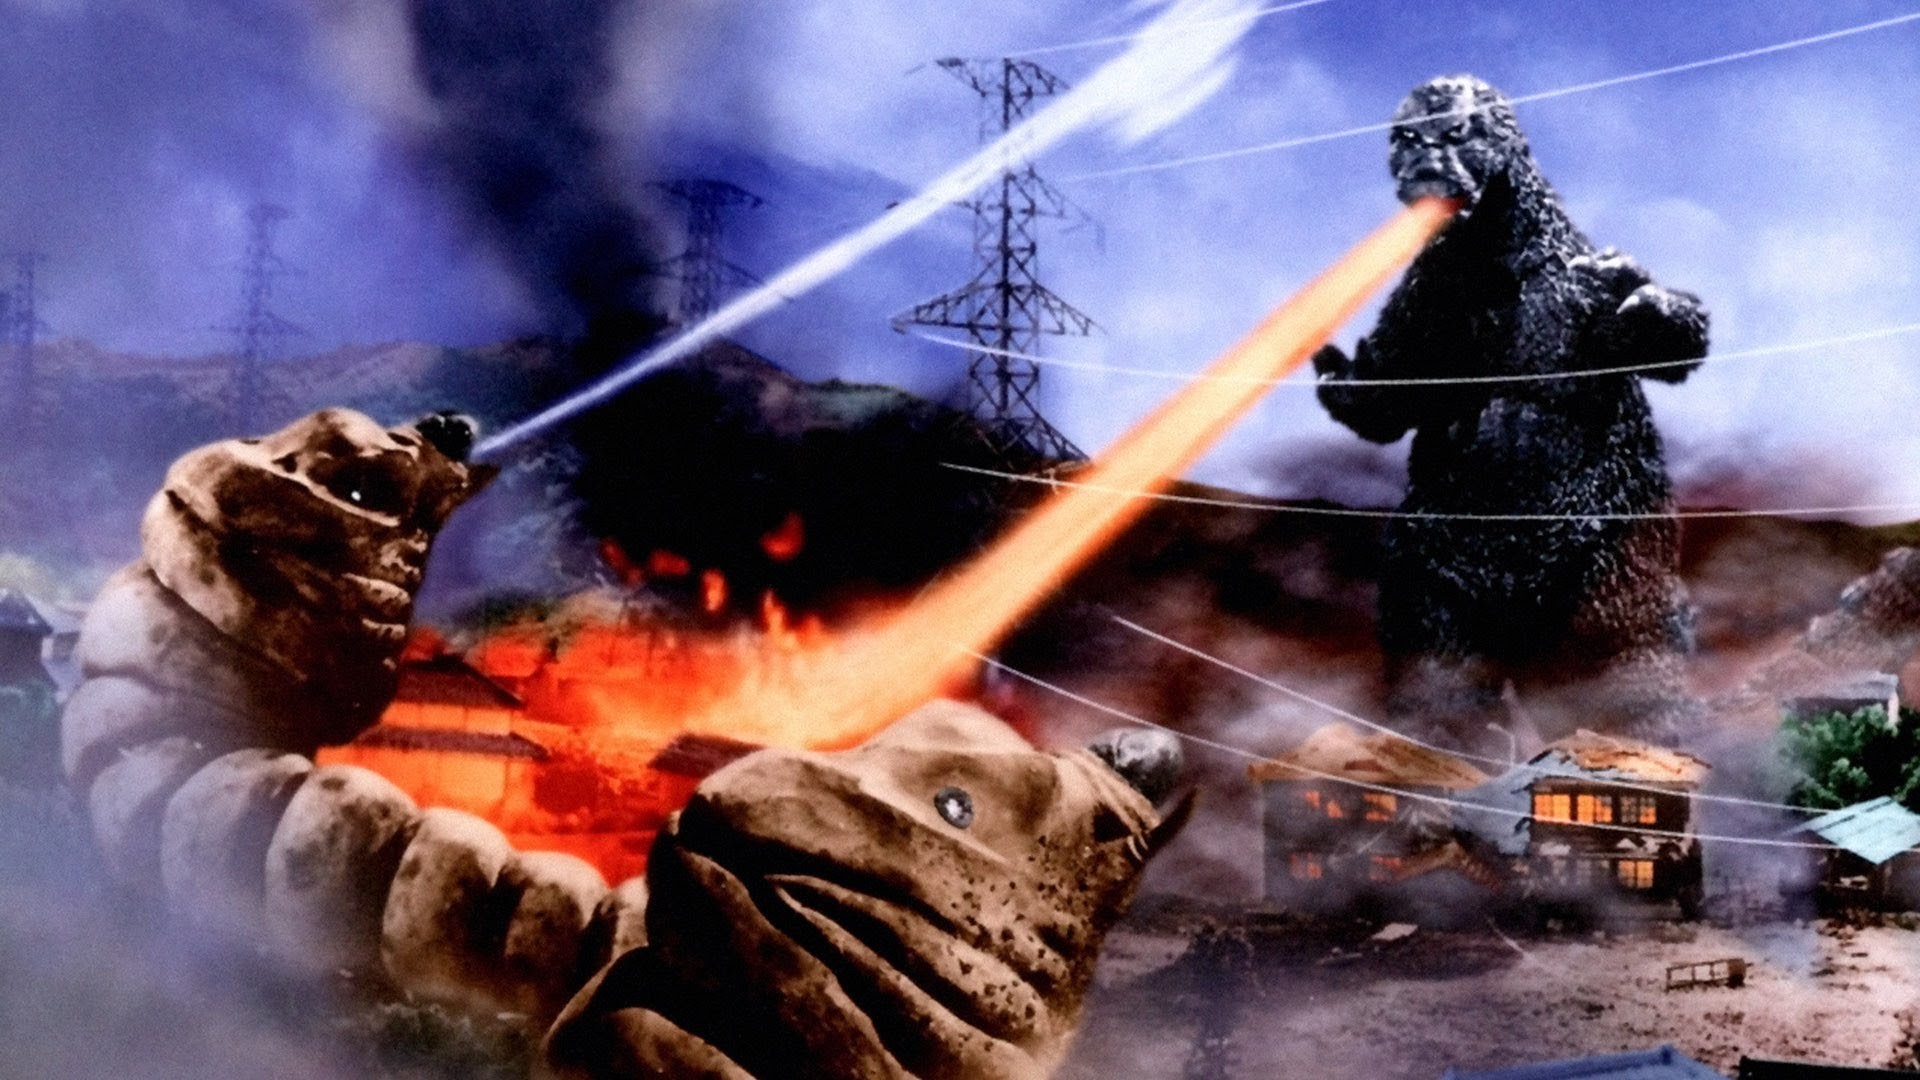 1920x1080 Mothra Vs. Godzilla (1964) Movie Review by JWU